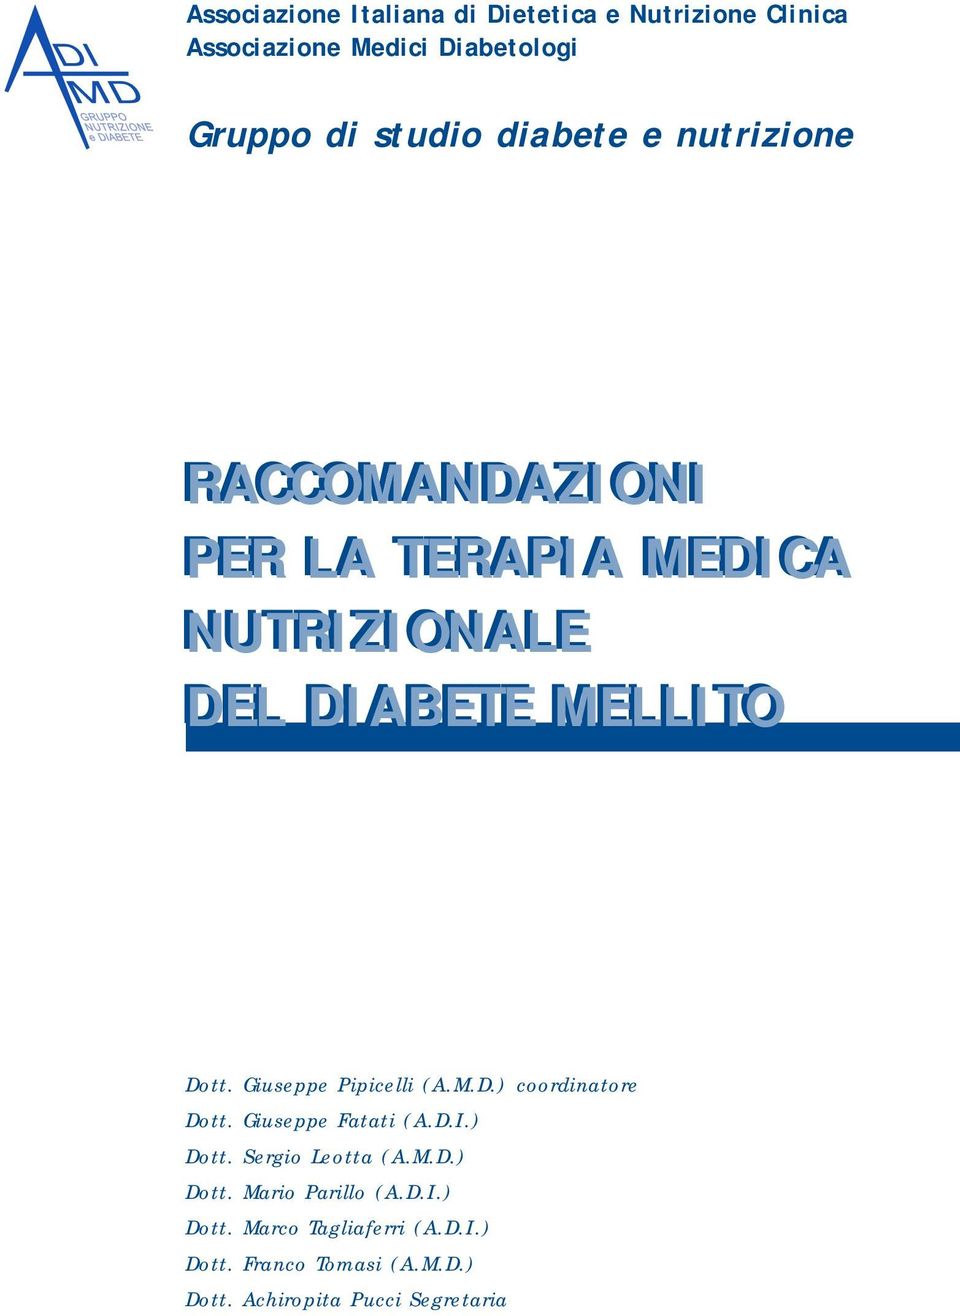 Giuseppe Pipicelli (A.M.D.) coordinatore Dott. Giuseppe Fatati (A.D.I.) Dott. Sergio Leotta (A.M.D.) Dott. Mario Parillo (A.